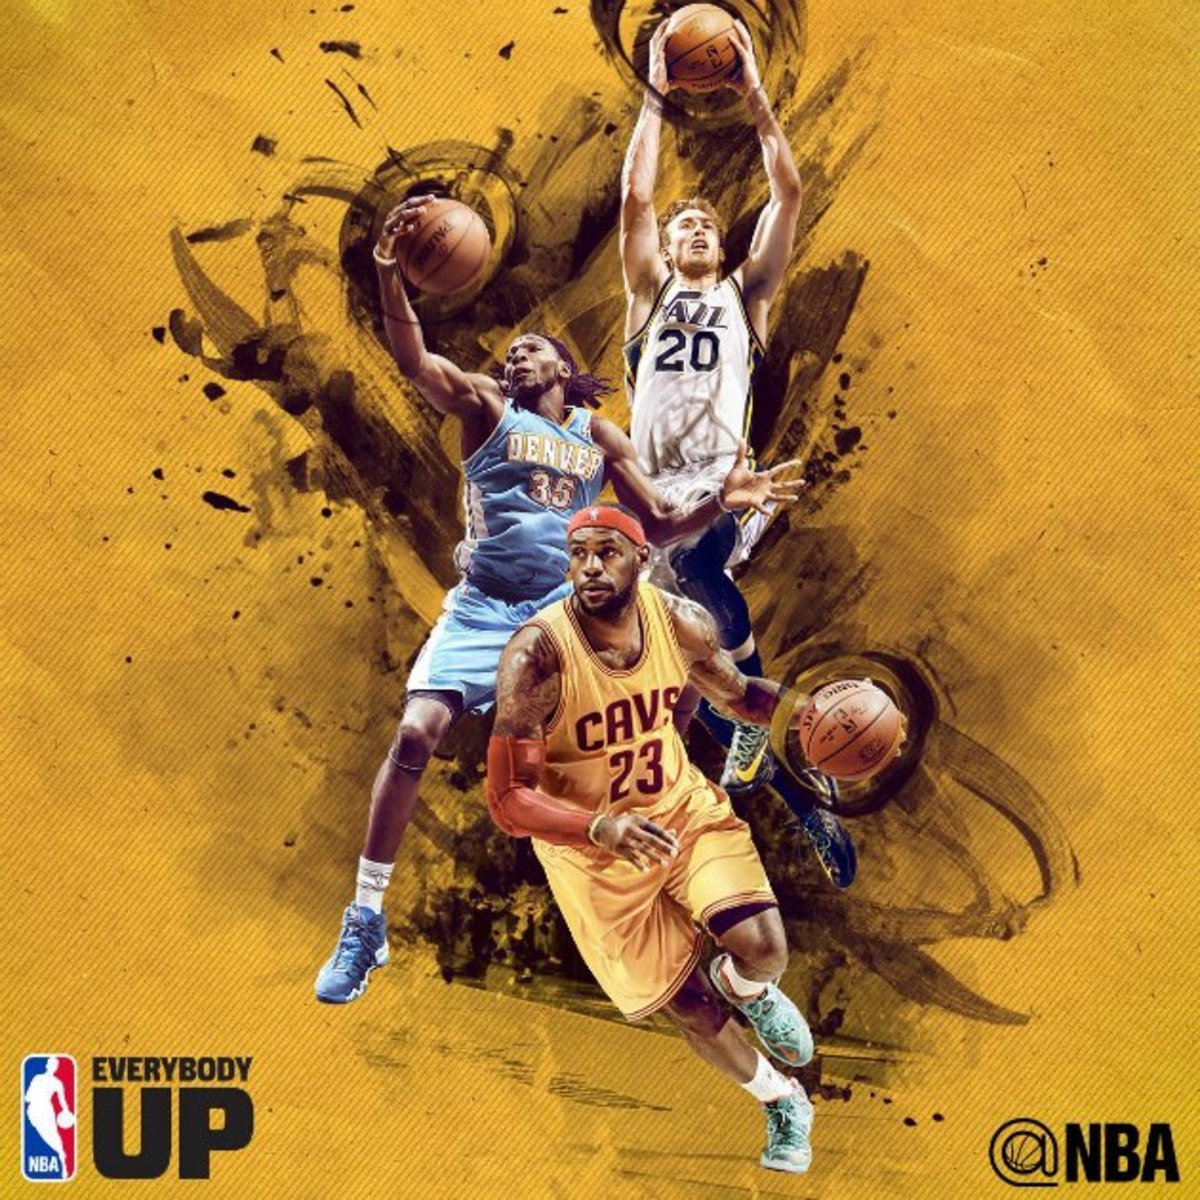 NBA-season-tip-off-Everybody-up-10.jpg